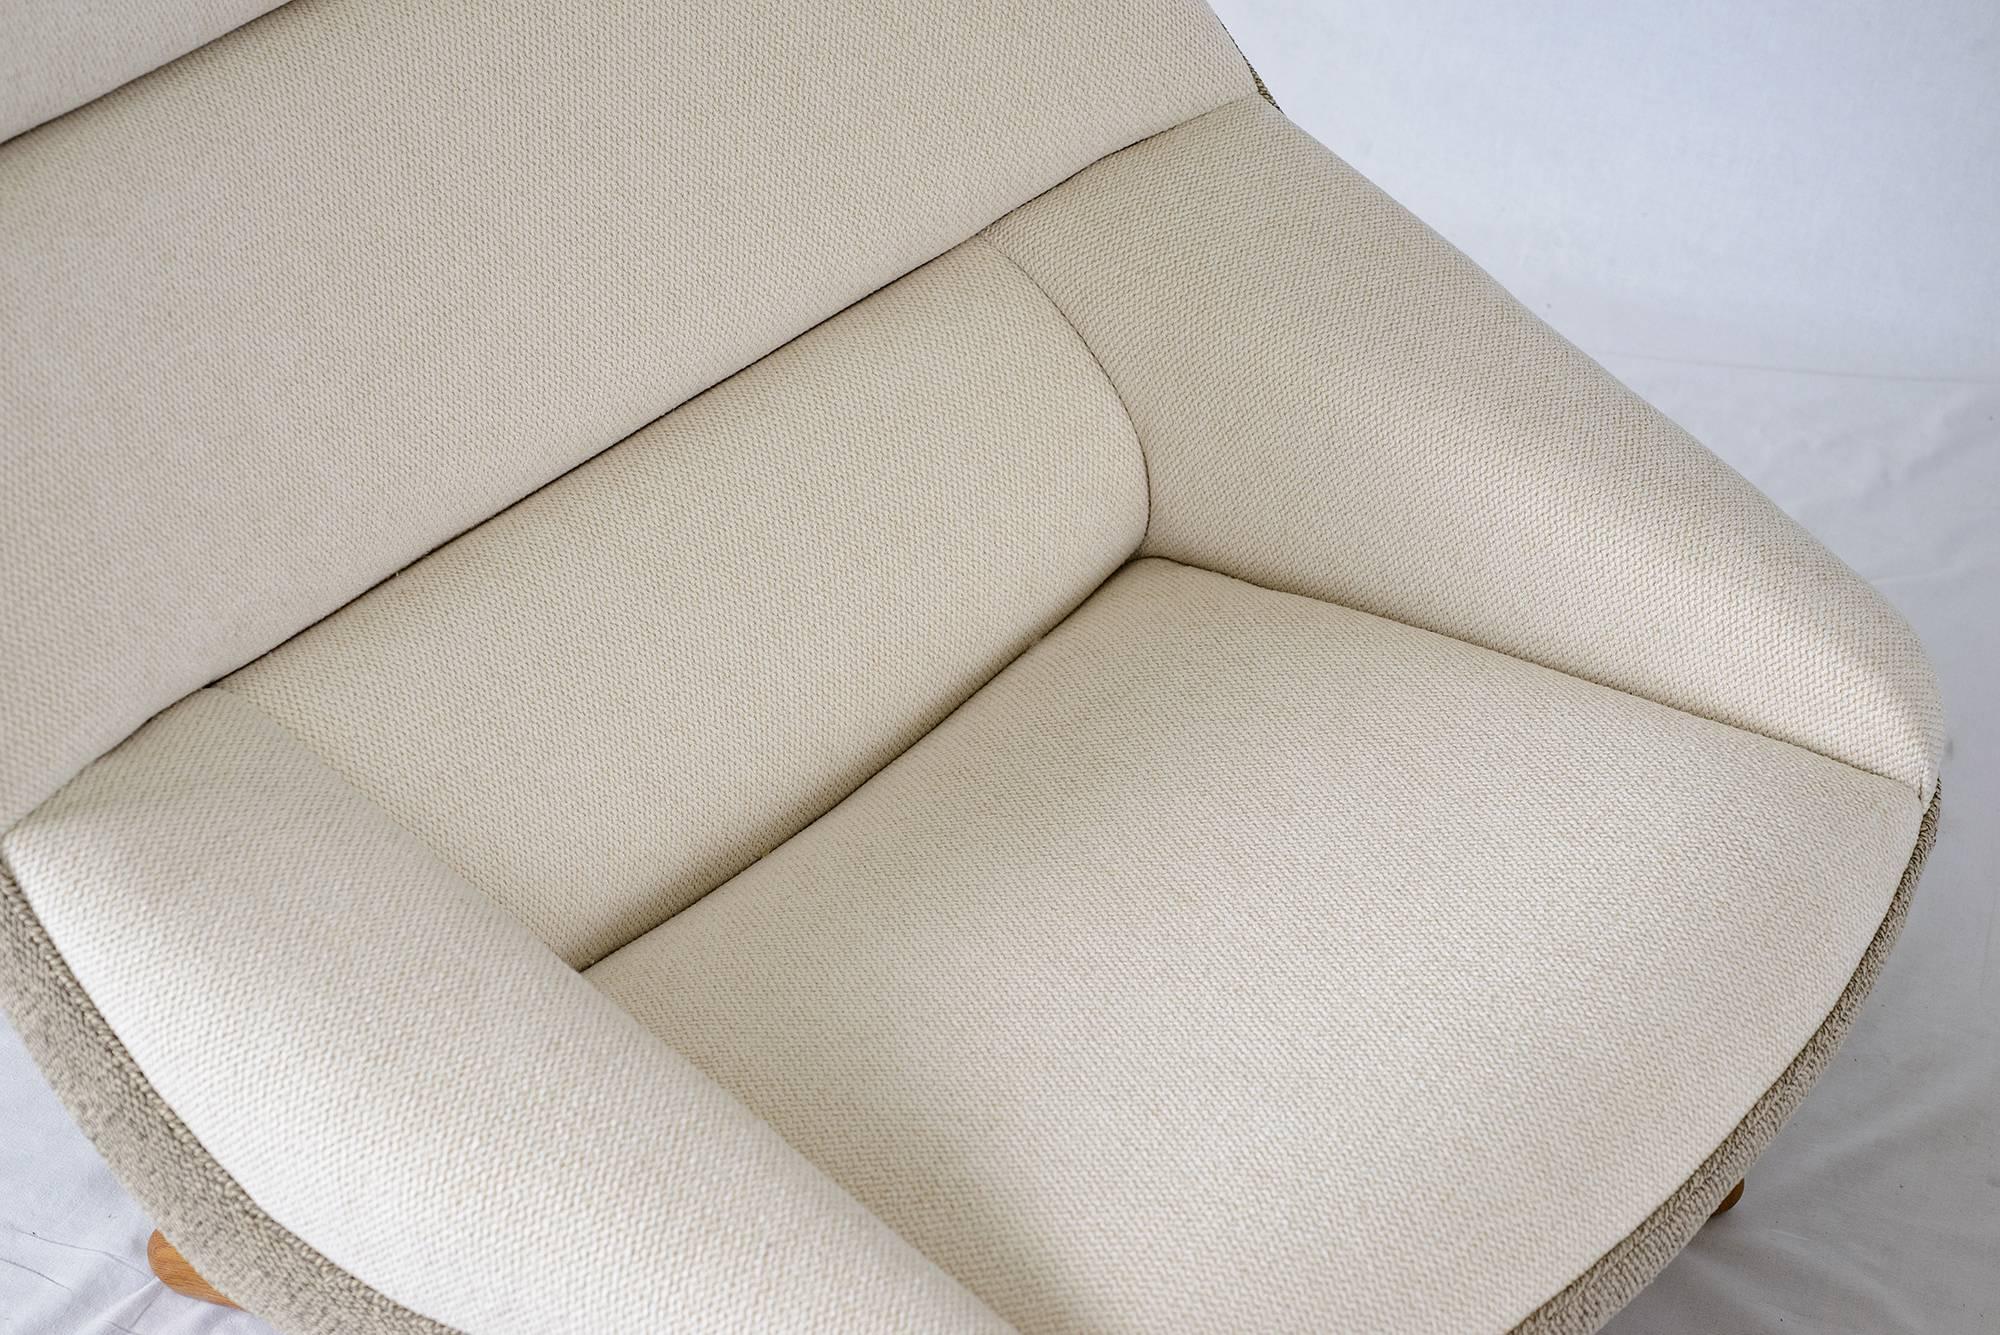 Fabric Illum Wikkelsø ML-91 Lounge Chair and Footstool